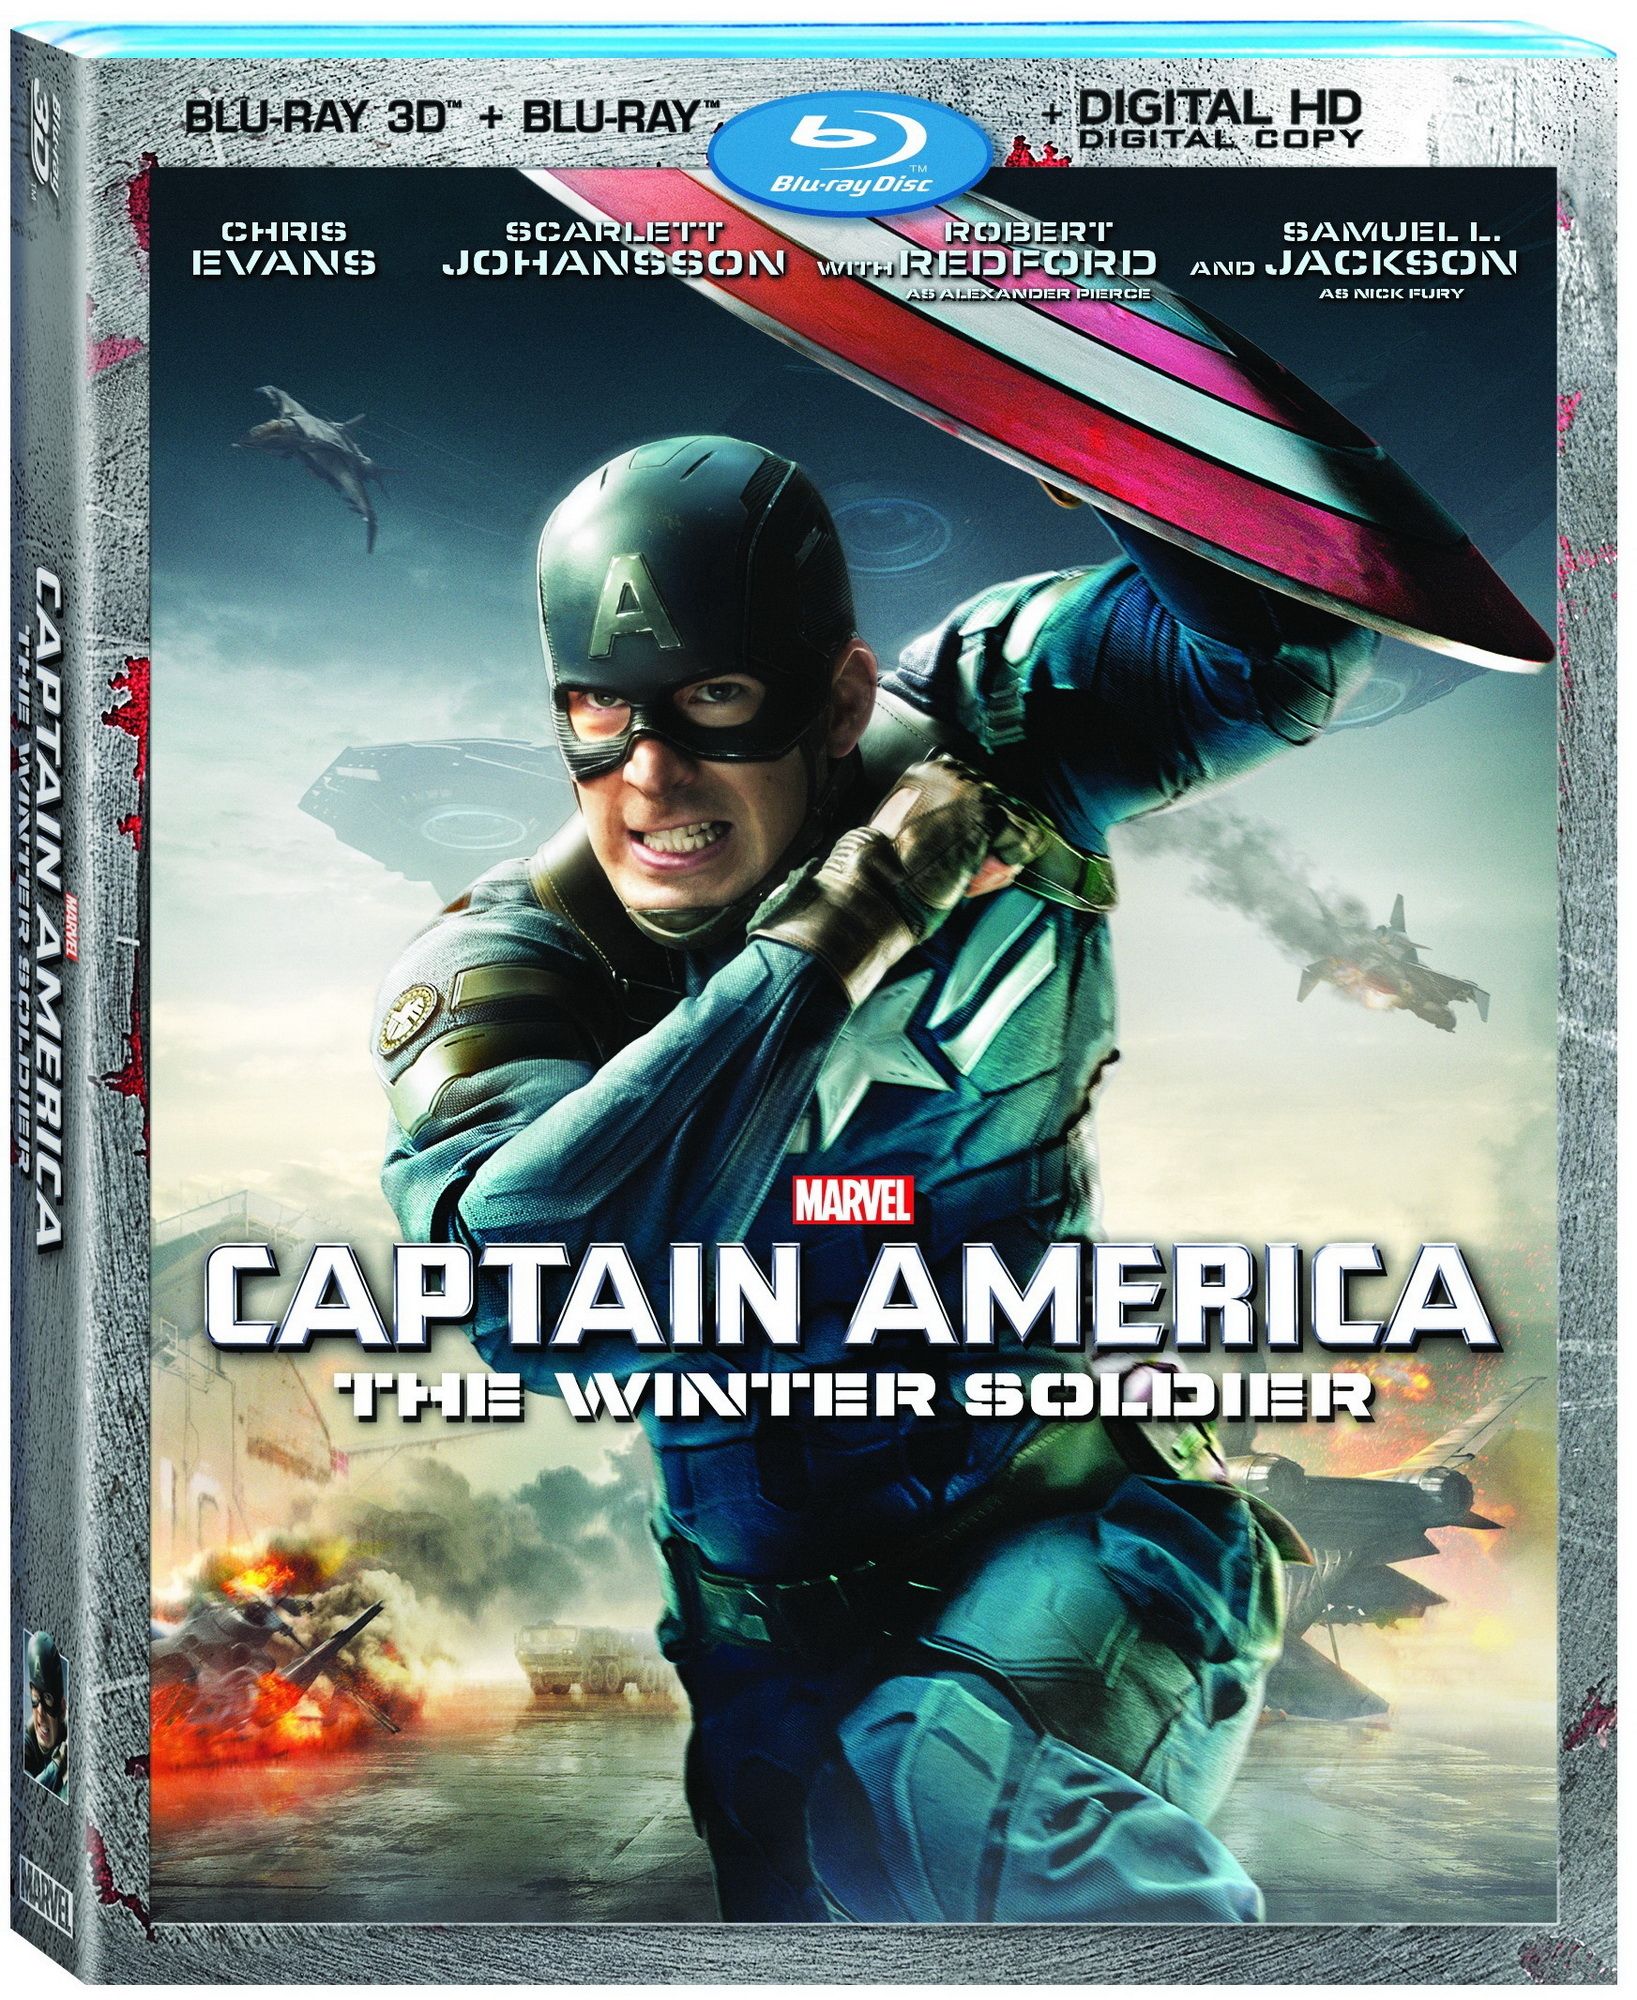 Cap 2 Blu-ray cover